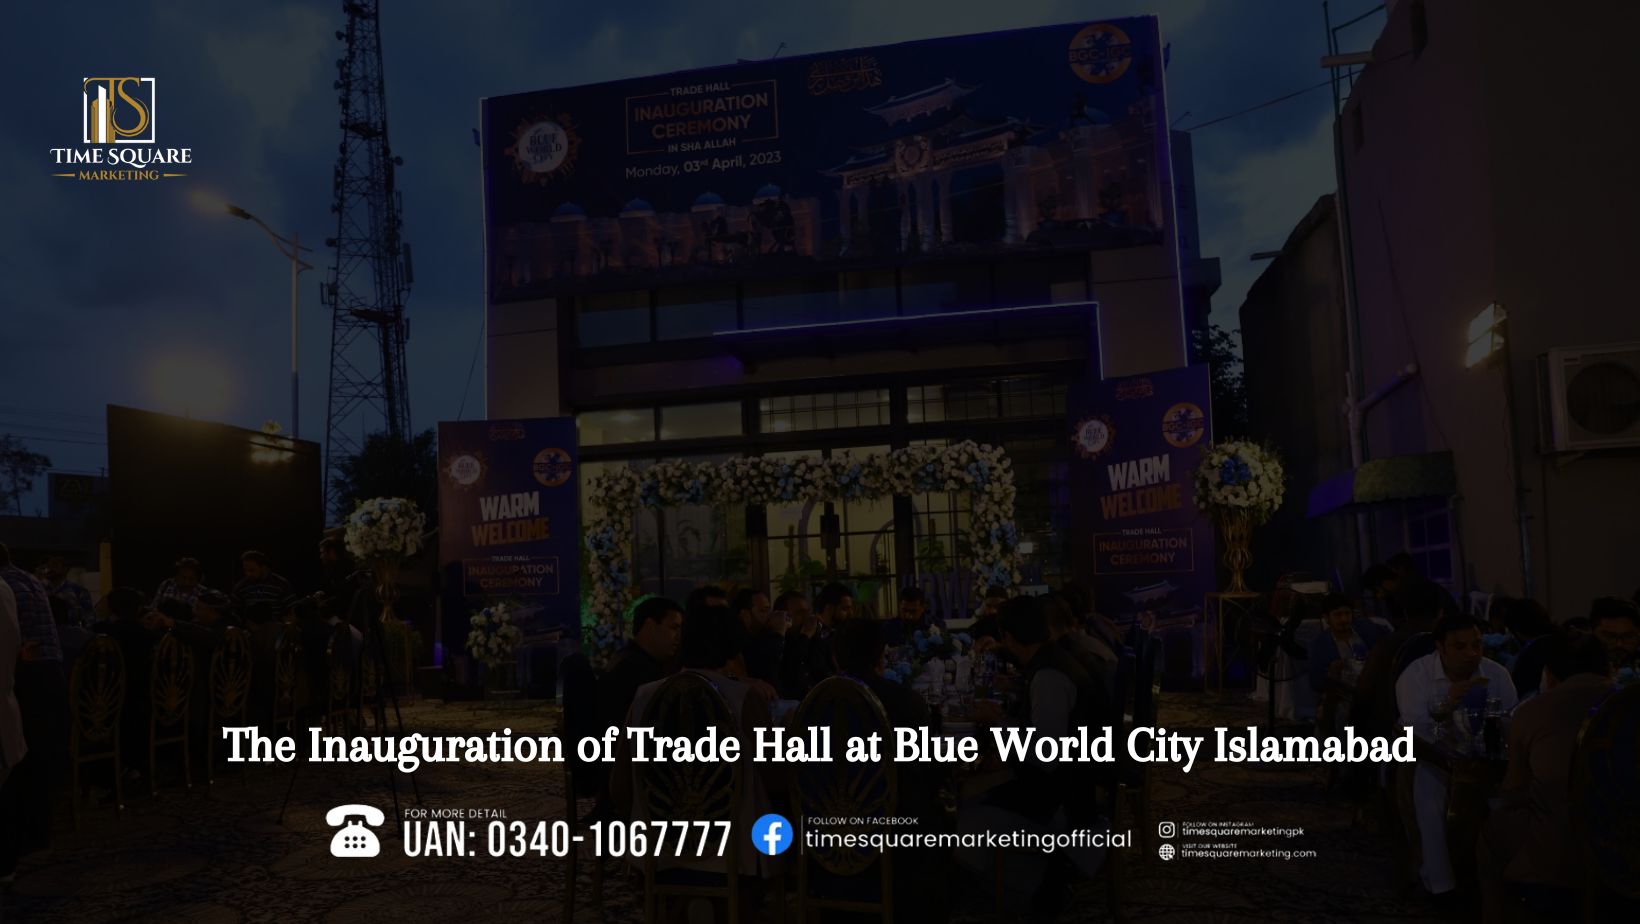 The Inauguration of Trade Hall at Blue World City Islamabad